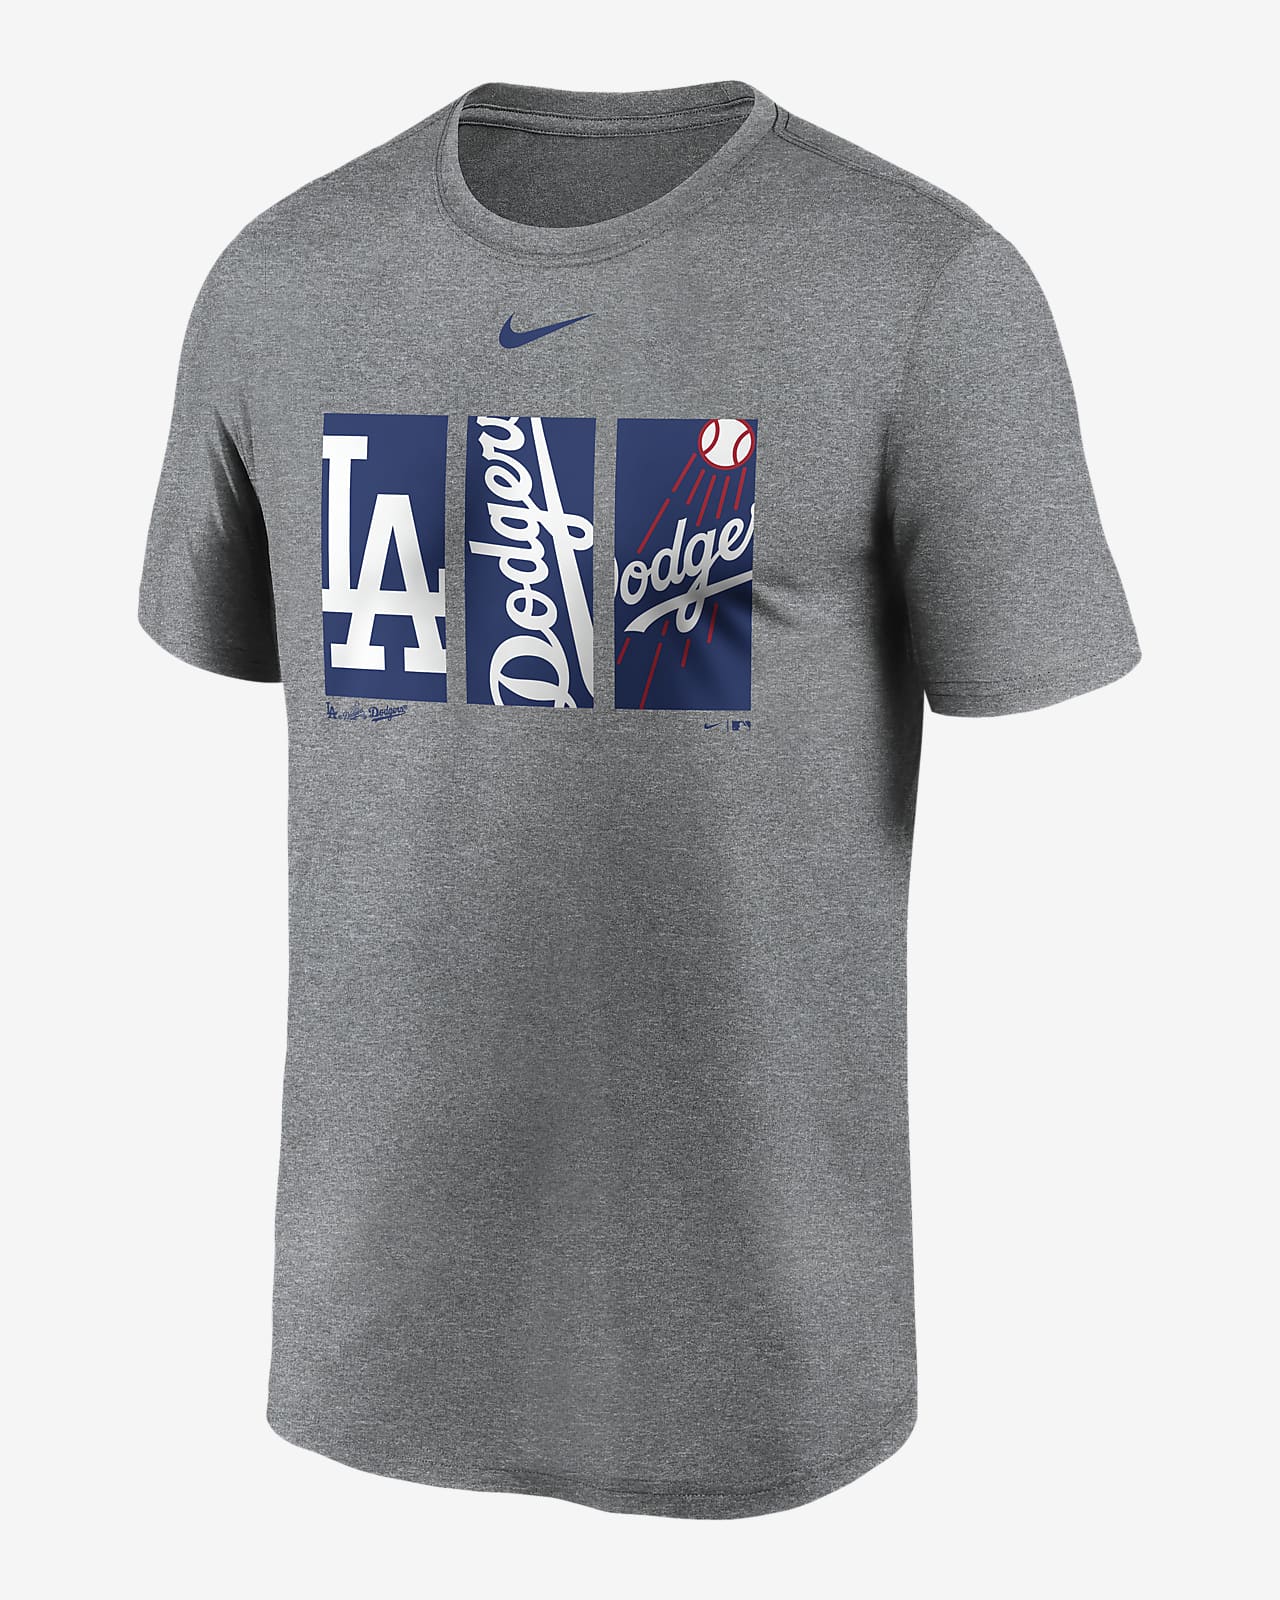 MLB Dodgers) Big Kids' (Boys') T-Shirt 